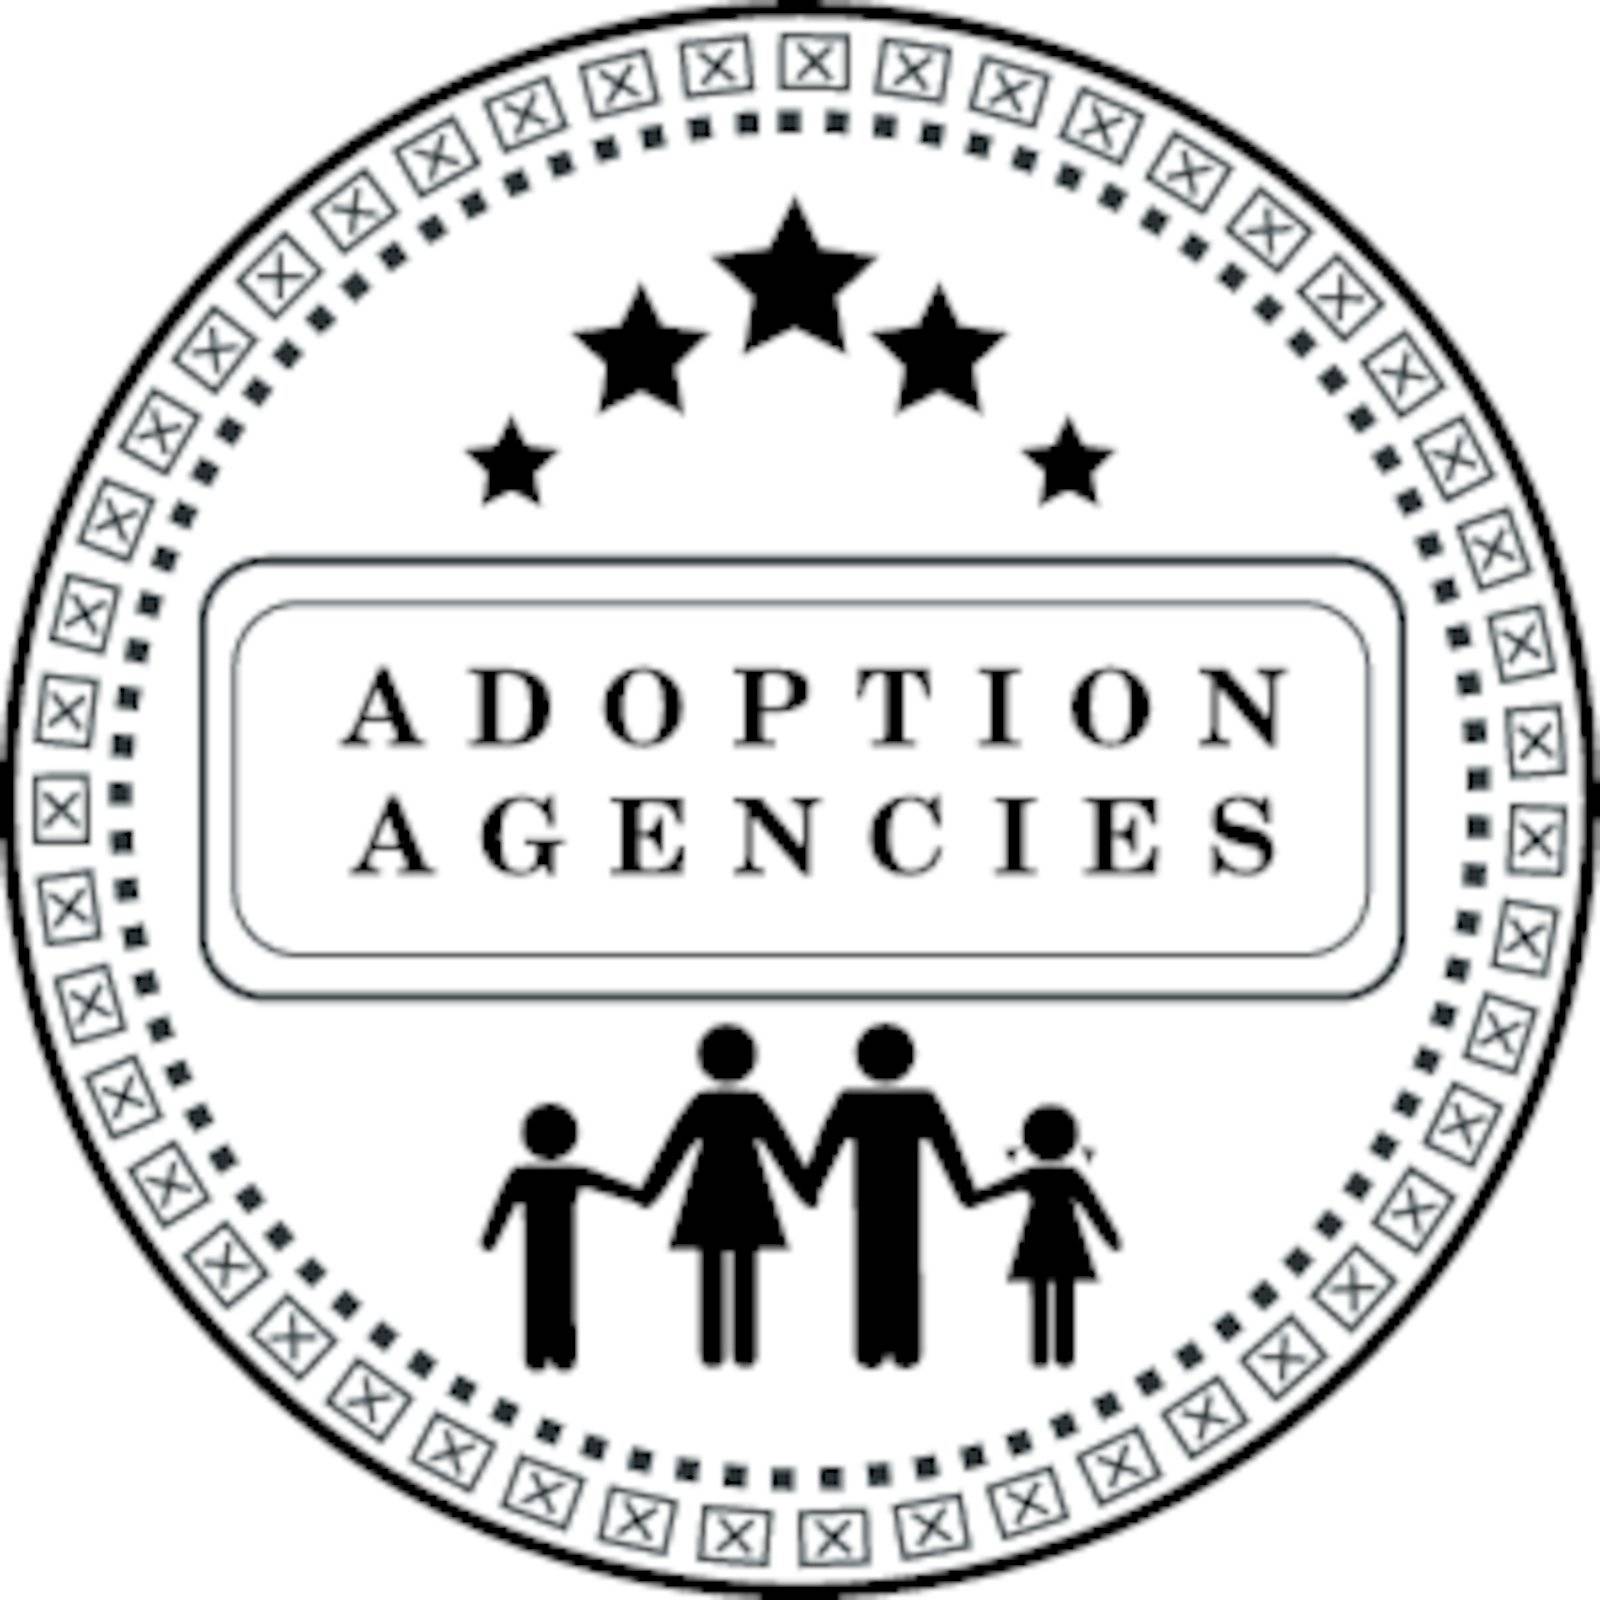 Stamp mark the adoption agency. Vector illustration.